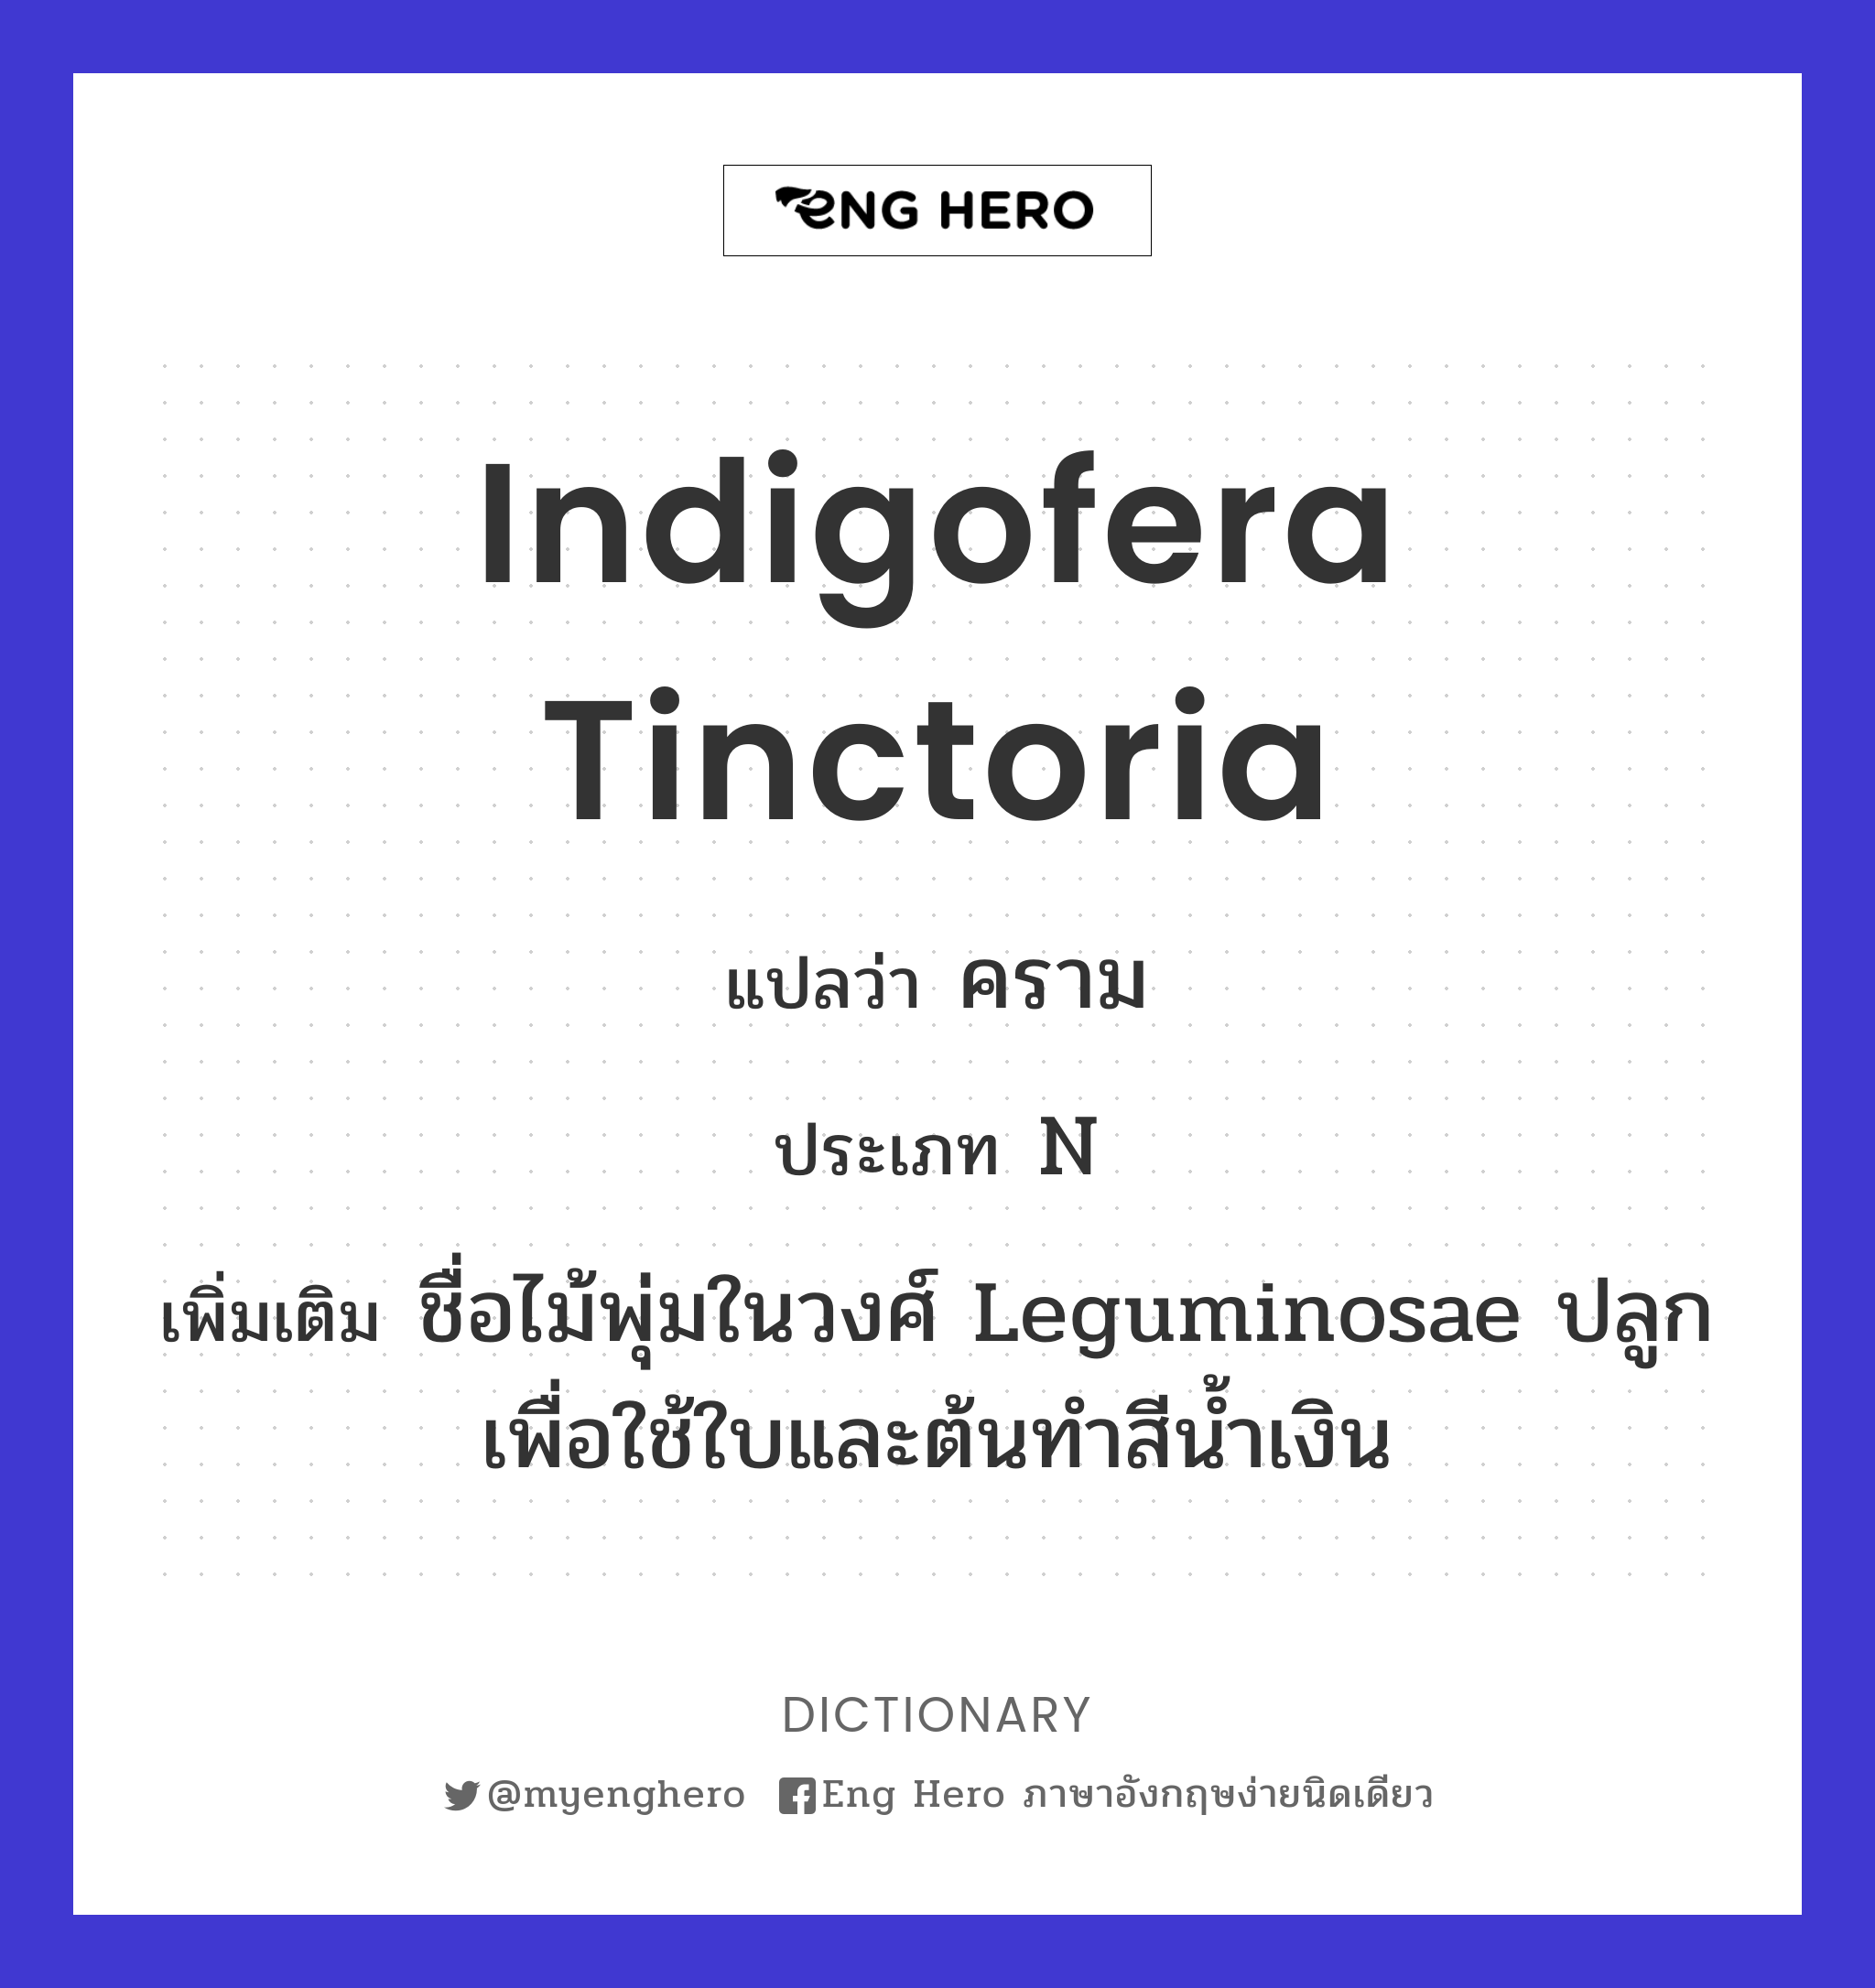 Indigofera tinctoria